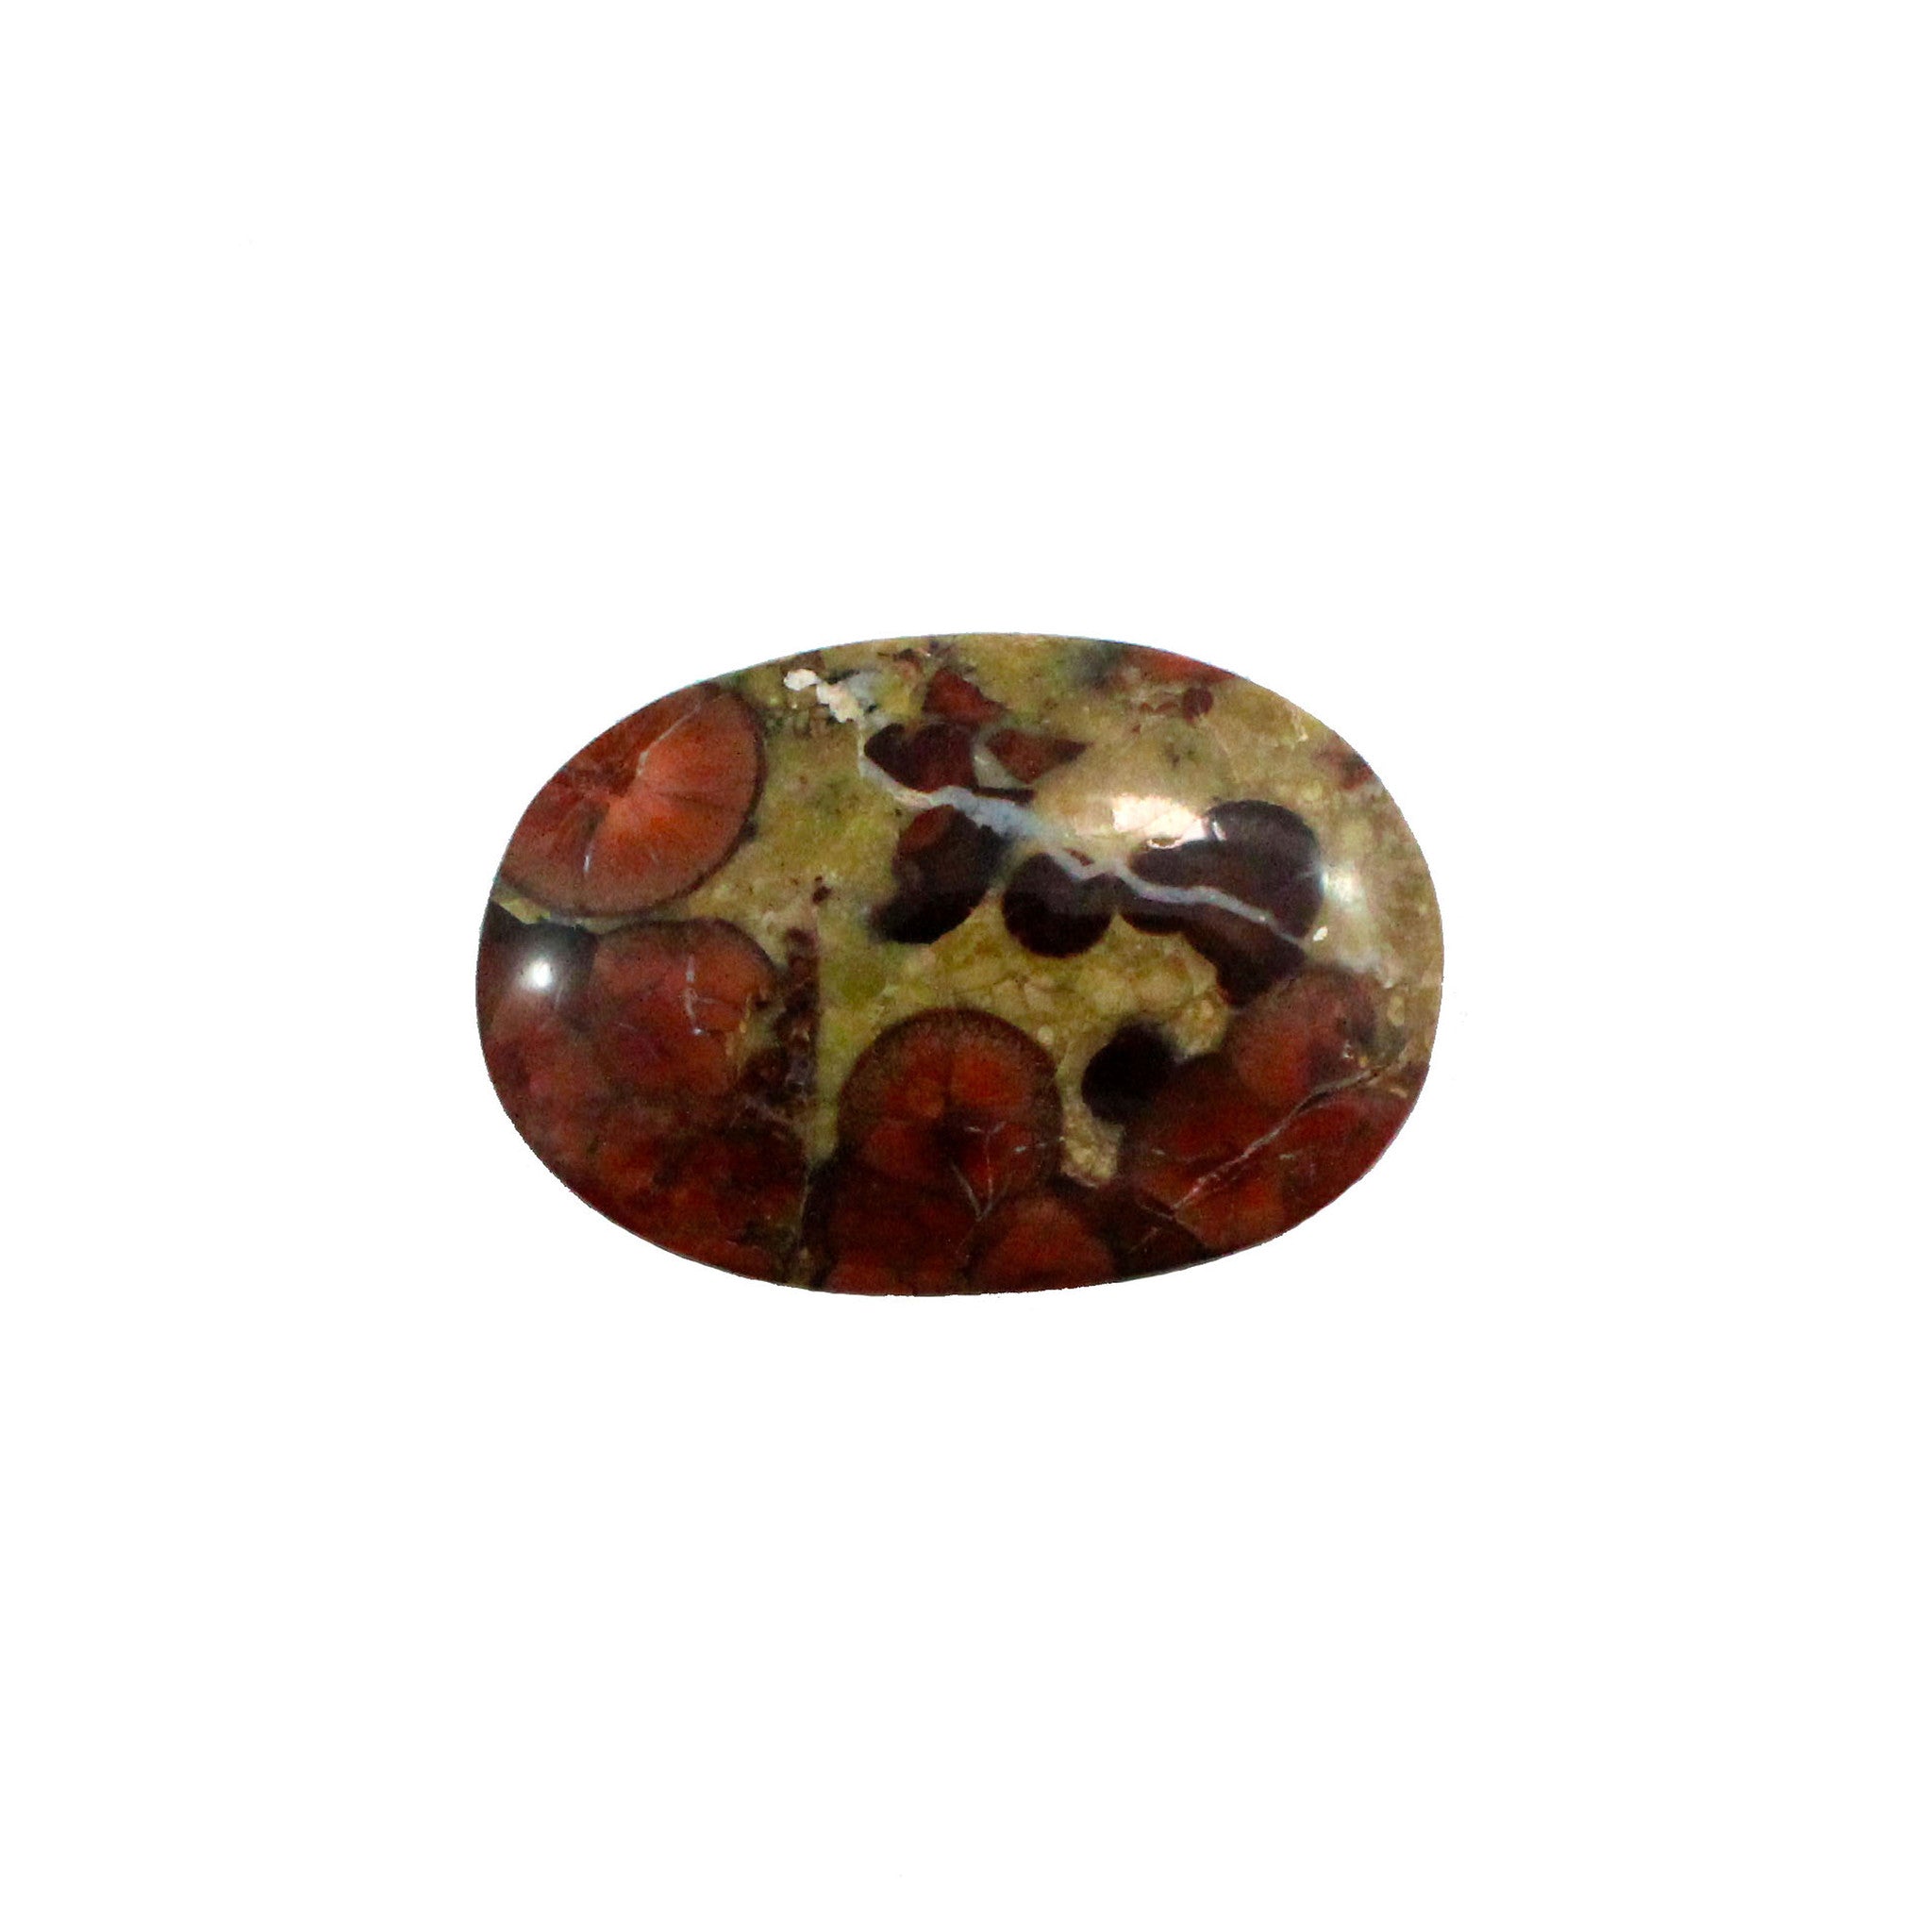 Peanut Rock 36x25mm oval cut cabochon - Make your own custom jewelry - Sarah Hughes - 1